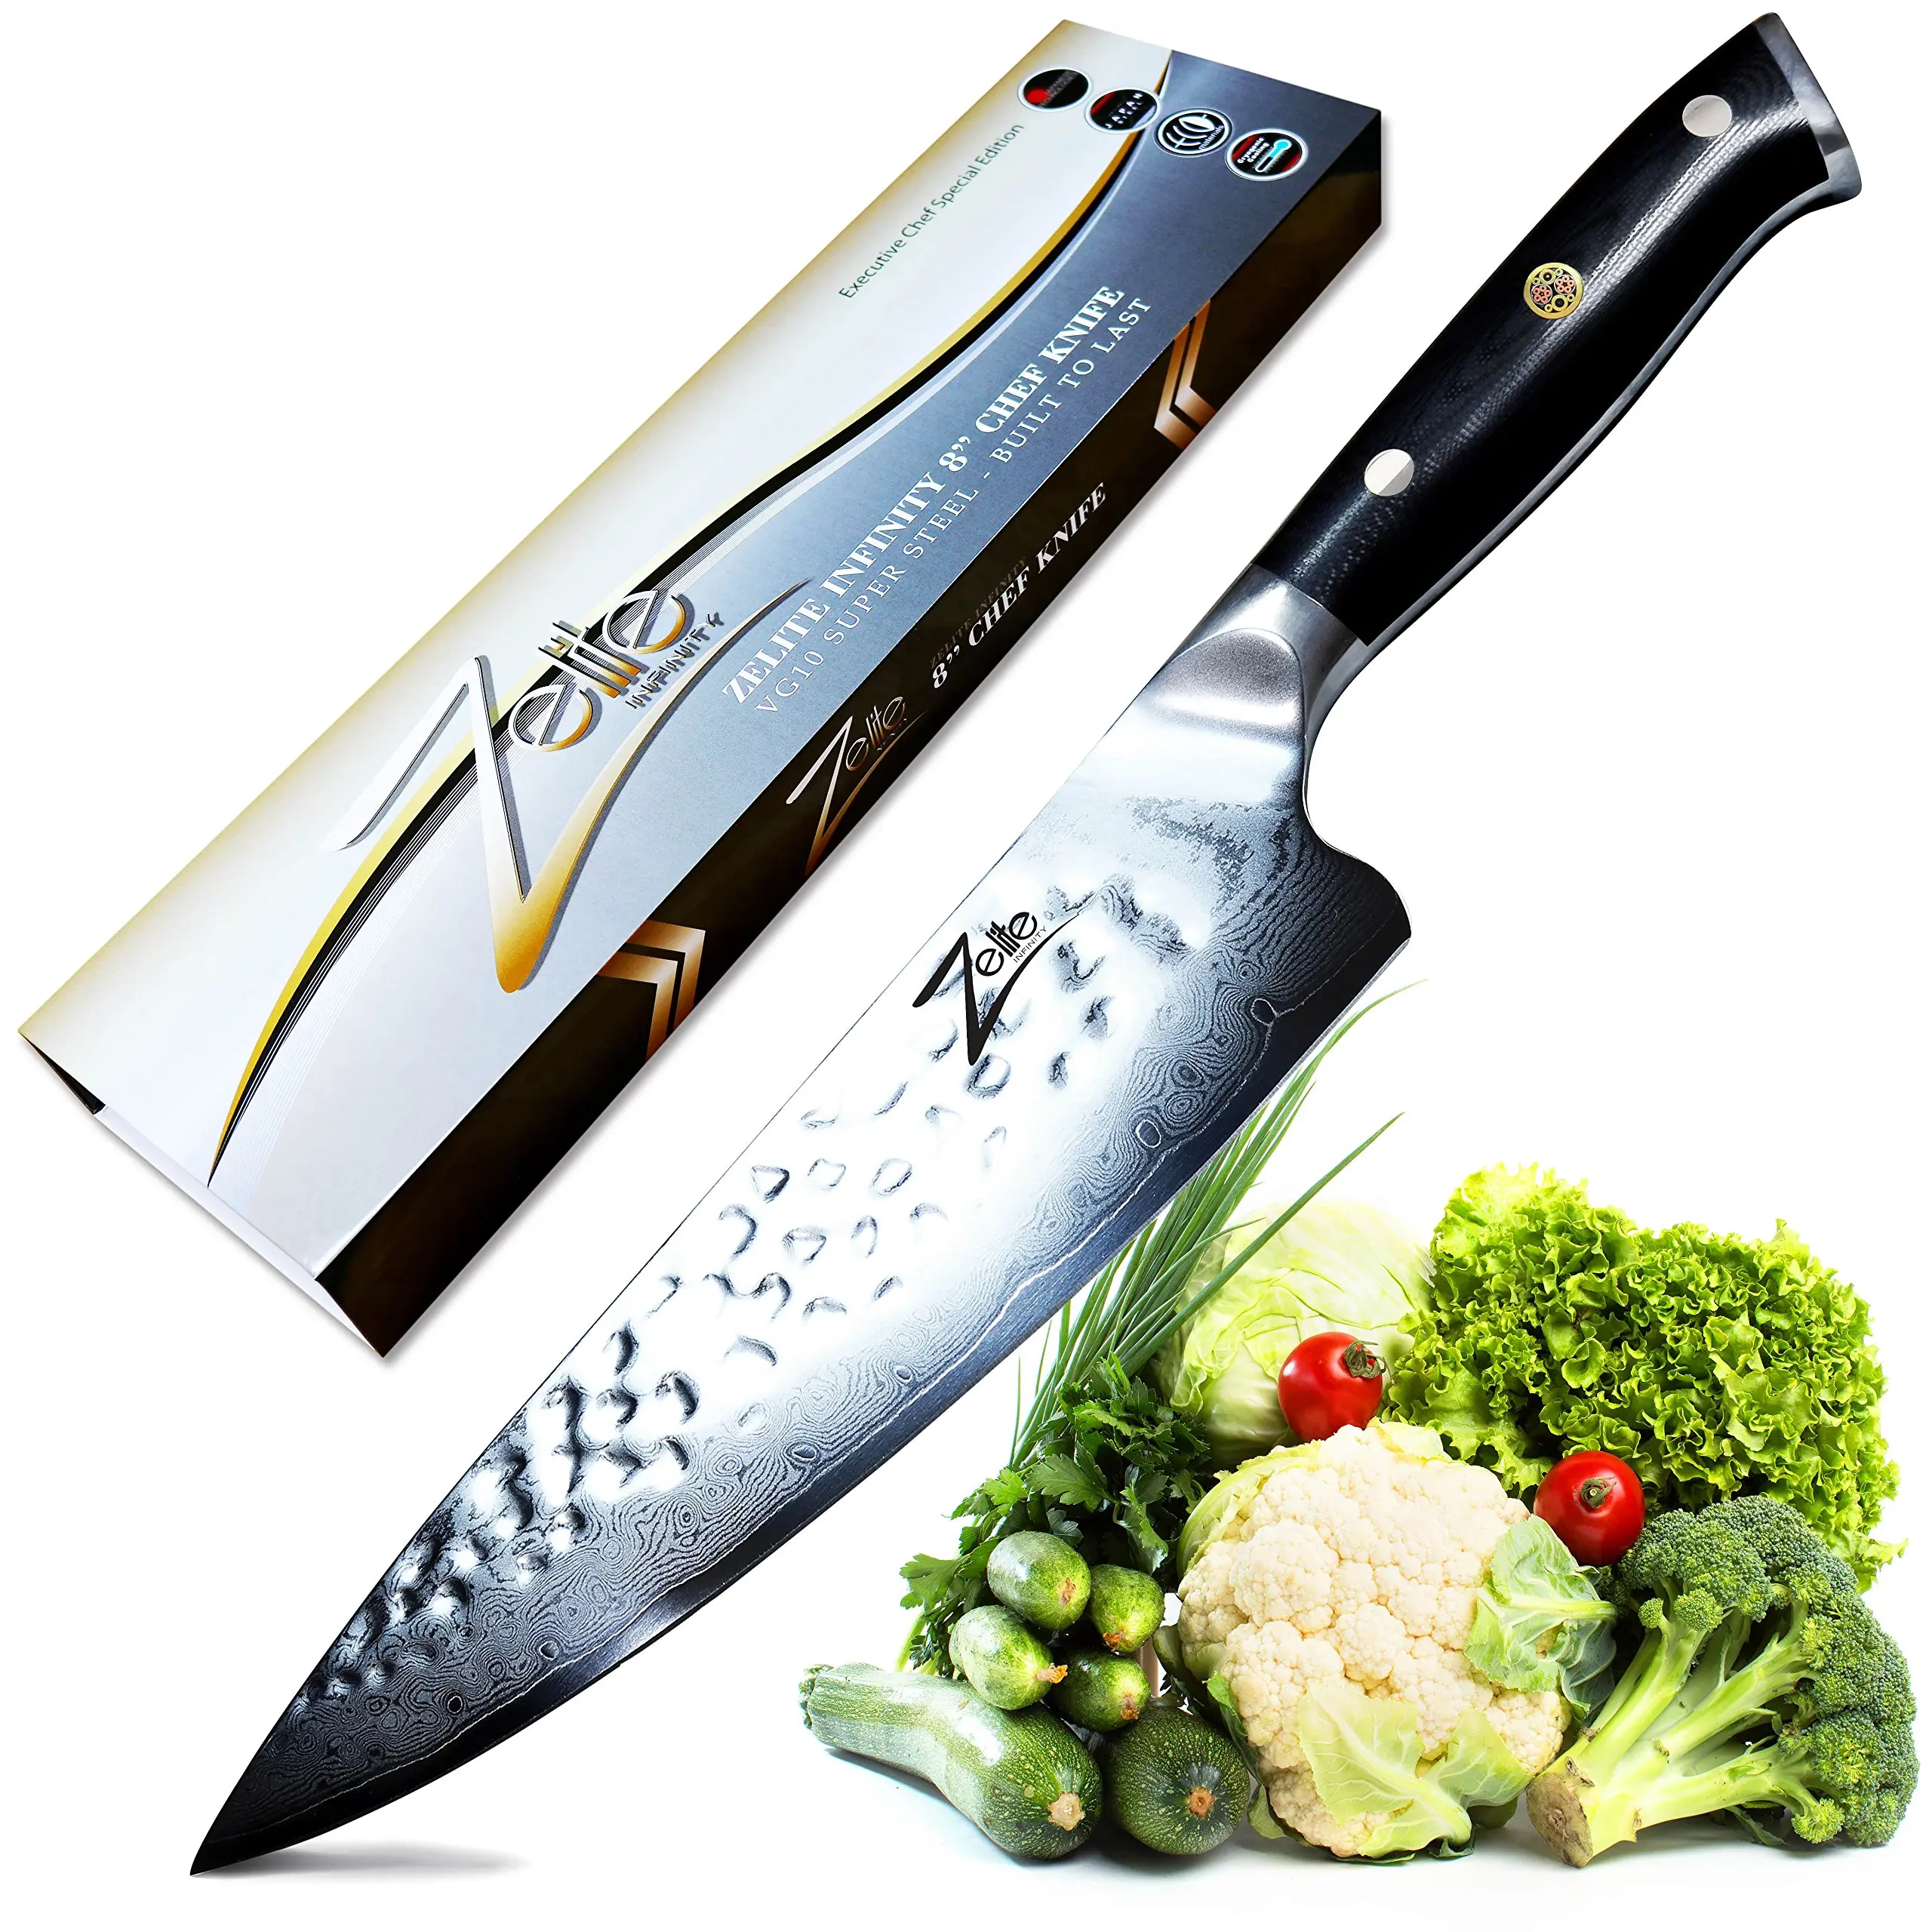 Недорогие кухонные ножи. Нож Chef Knife. Нож Kitchen Design Chef Knife. Шеф нож Викторинокс. Японские кухонные ножи.